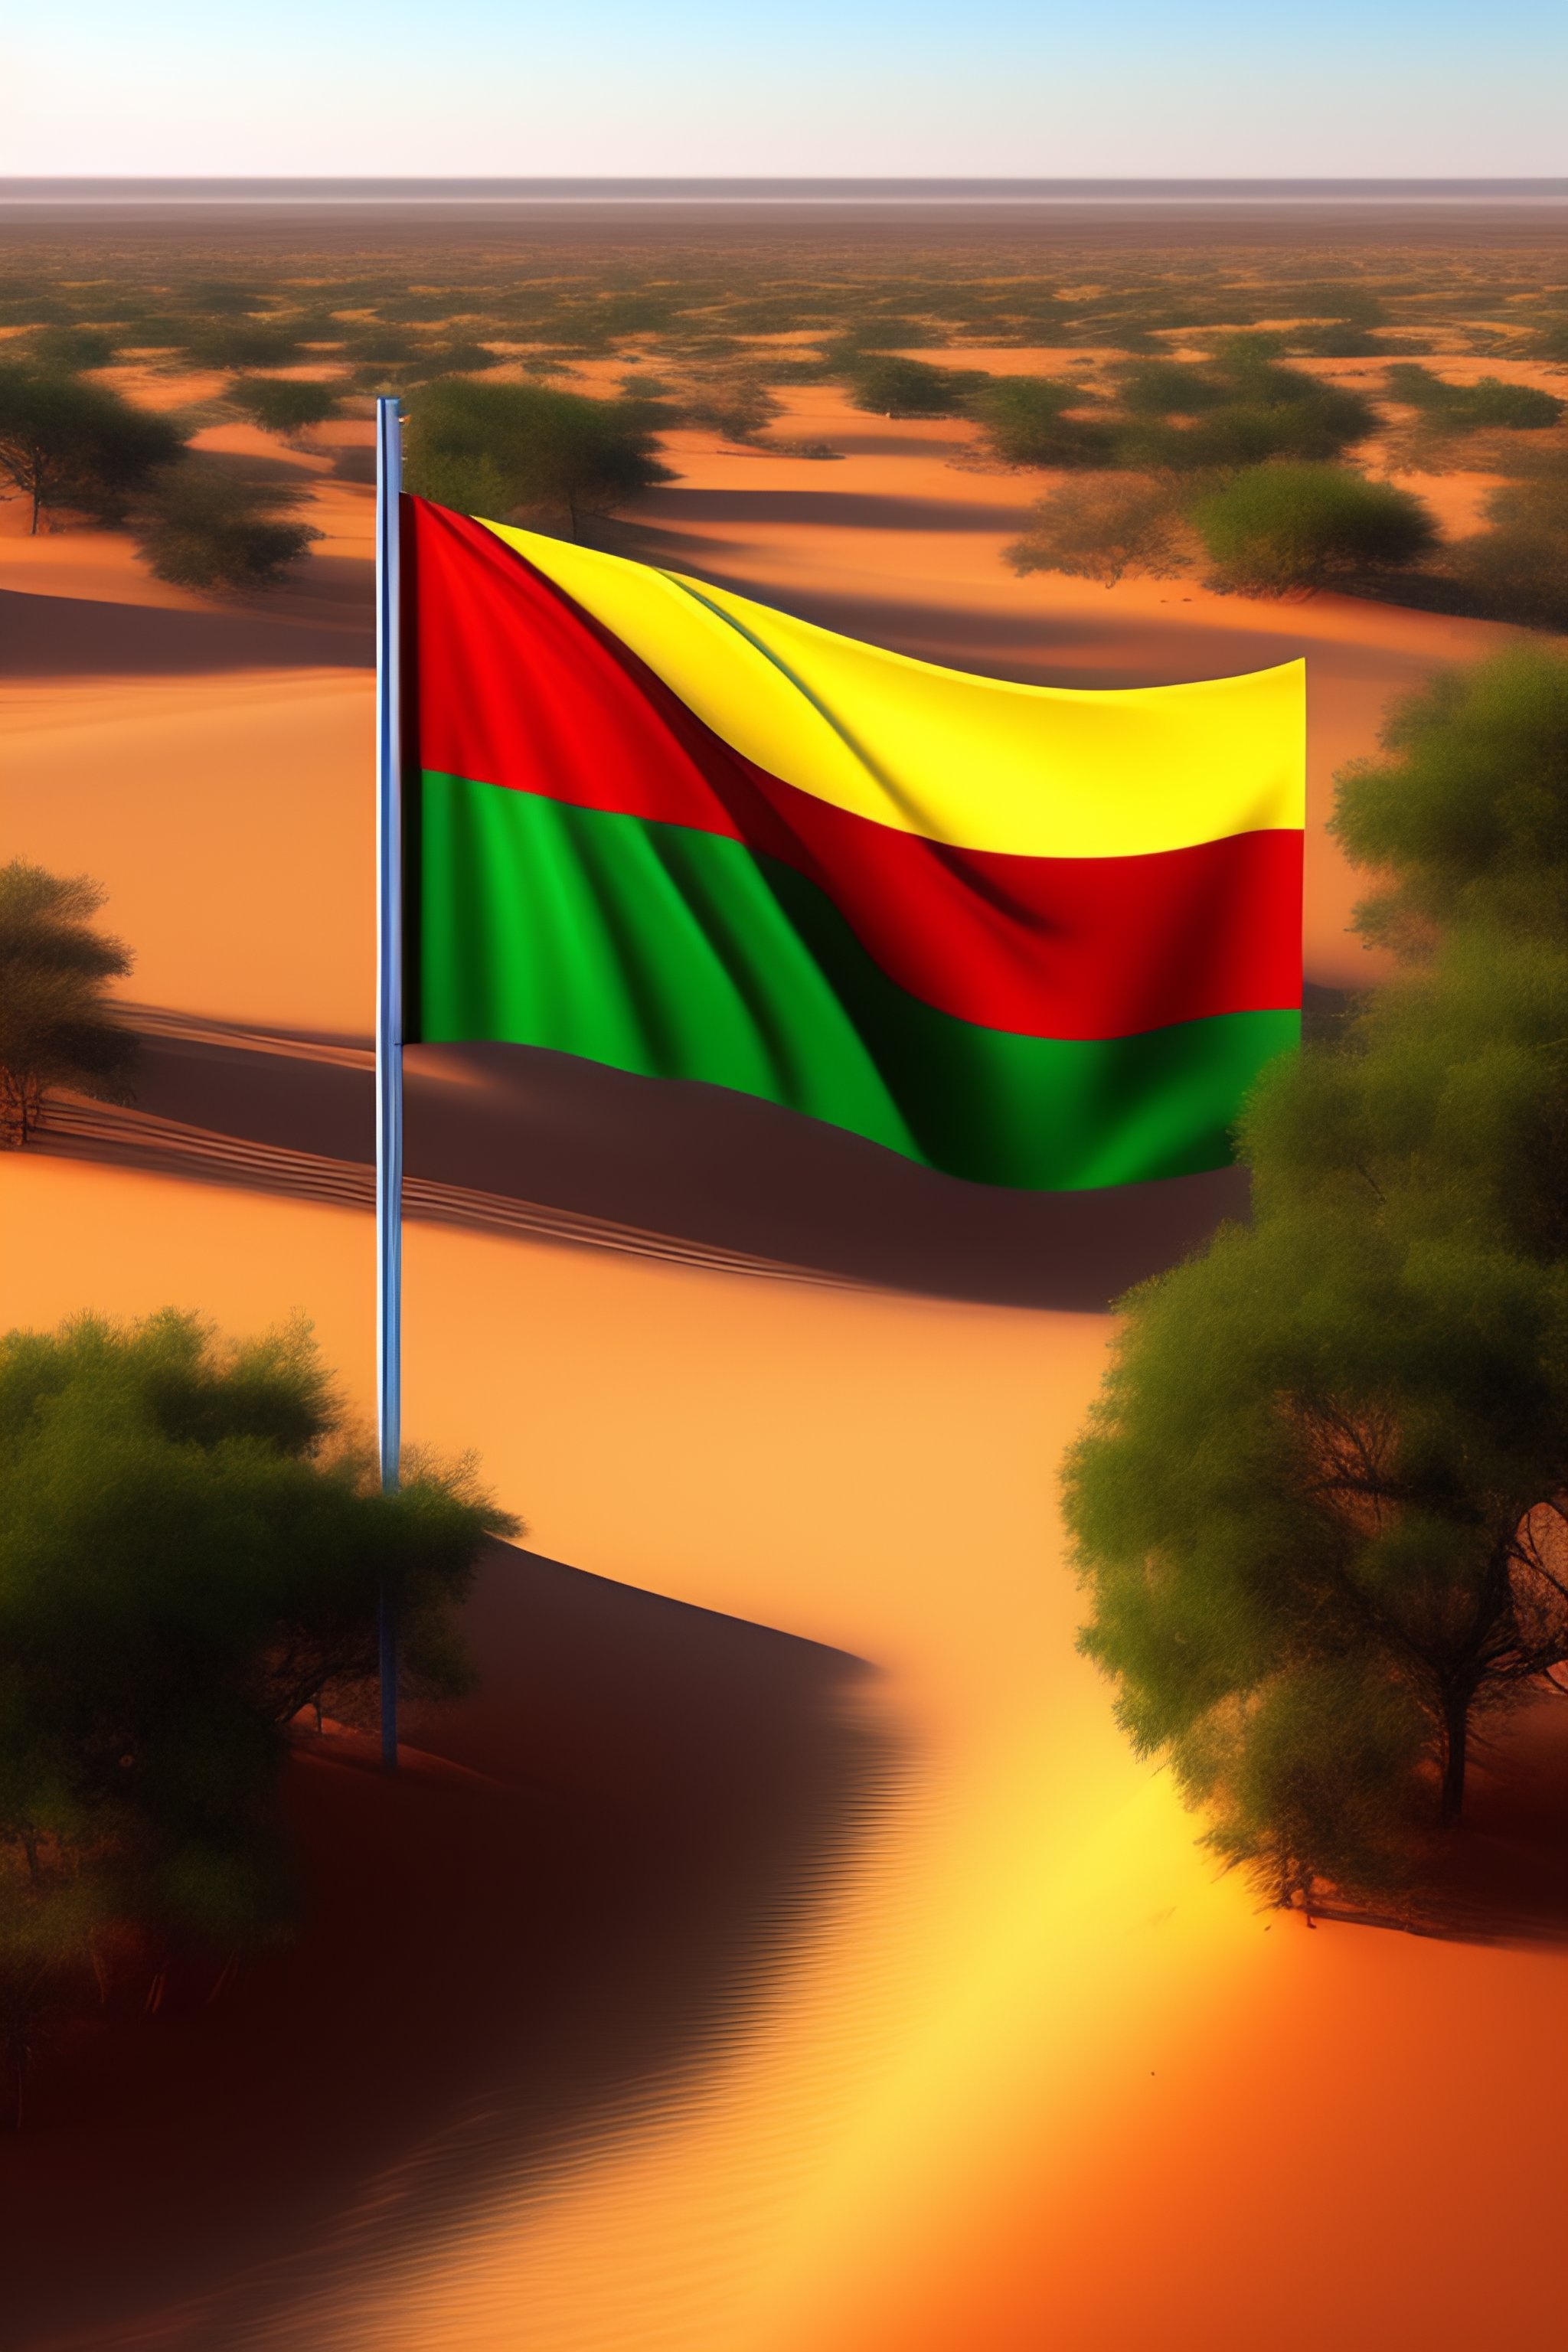 Lexica Sudan In 3030 Realistic 8k High Definition Sudanese Flag